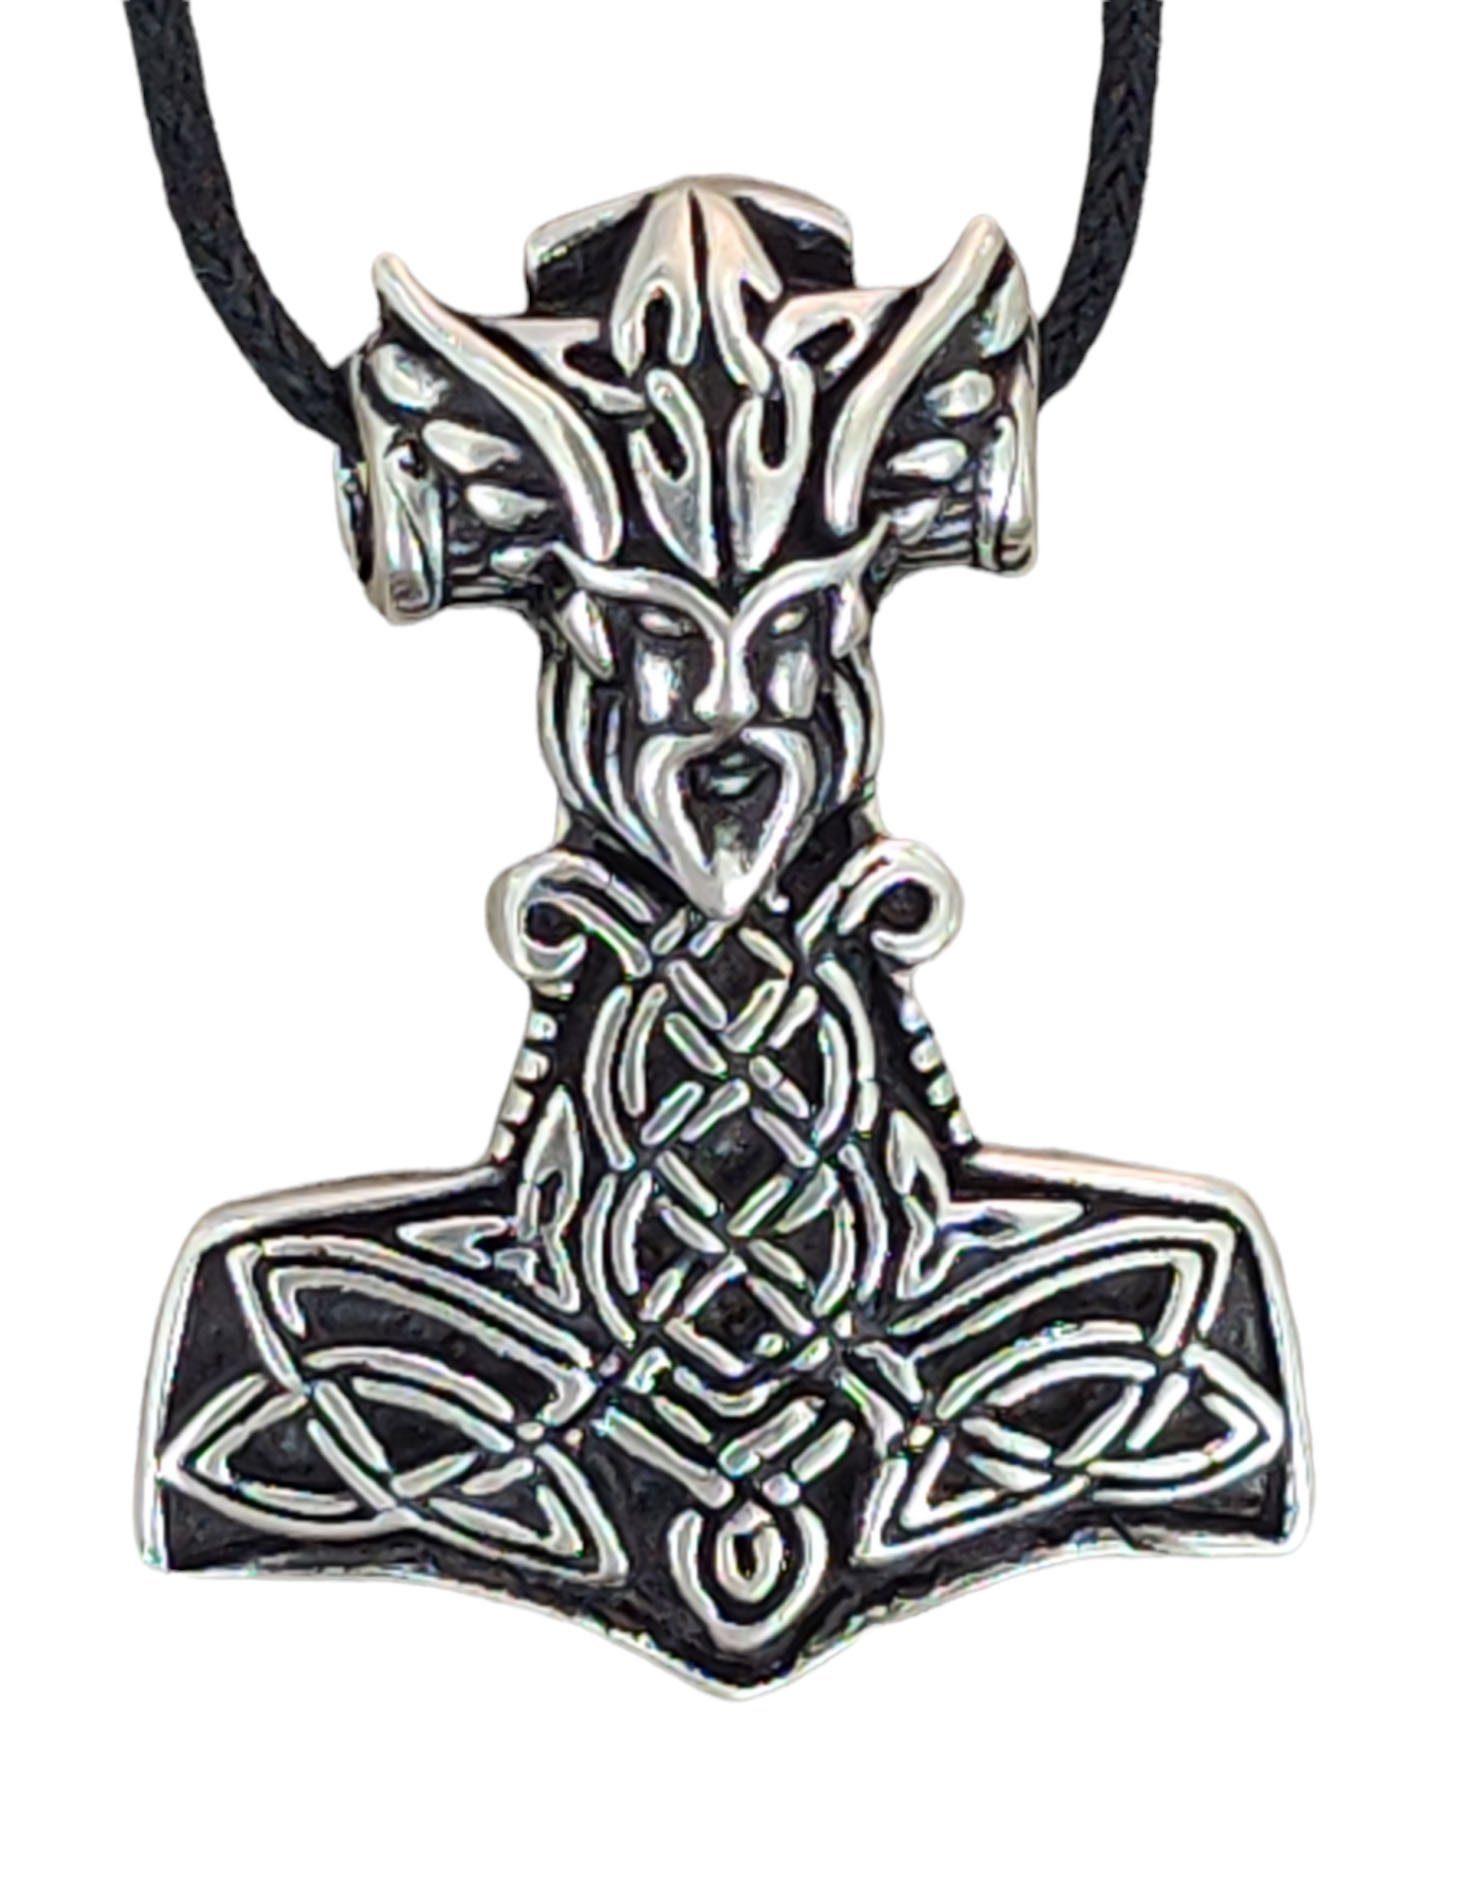 Silber Thors Thorshammer Leather Kettenanhänger Anhänger of Kopf Kiss Hammer 925 Thor Thorhammer Odins